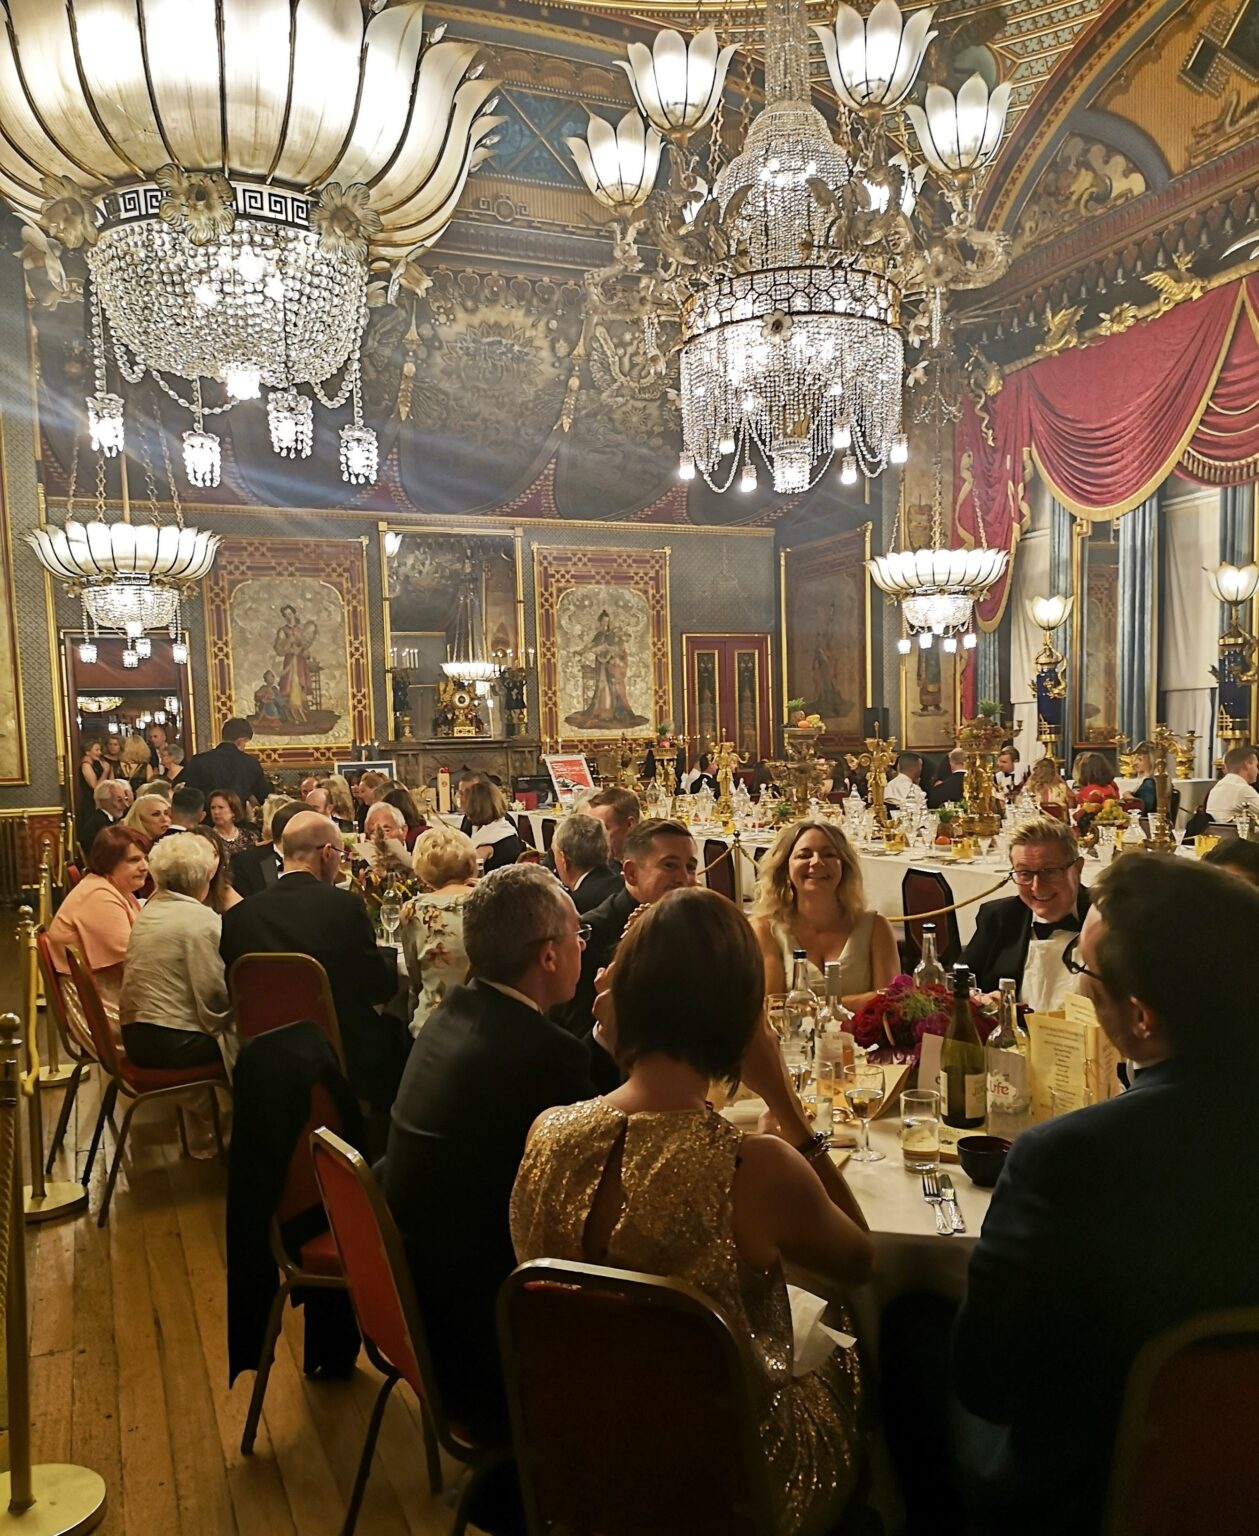 Mayor hosts Gala Banquet for her chosen charities - Survivors Network